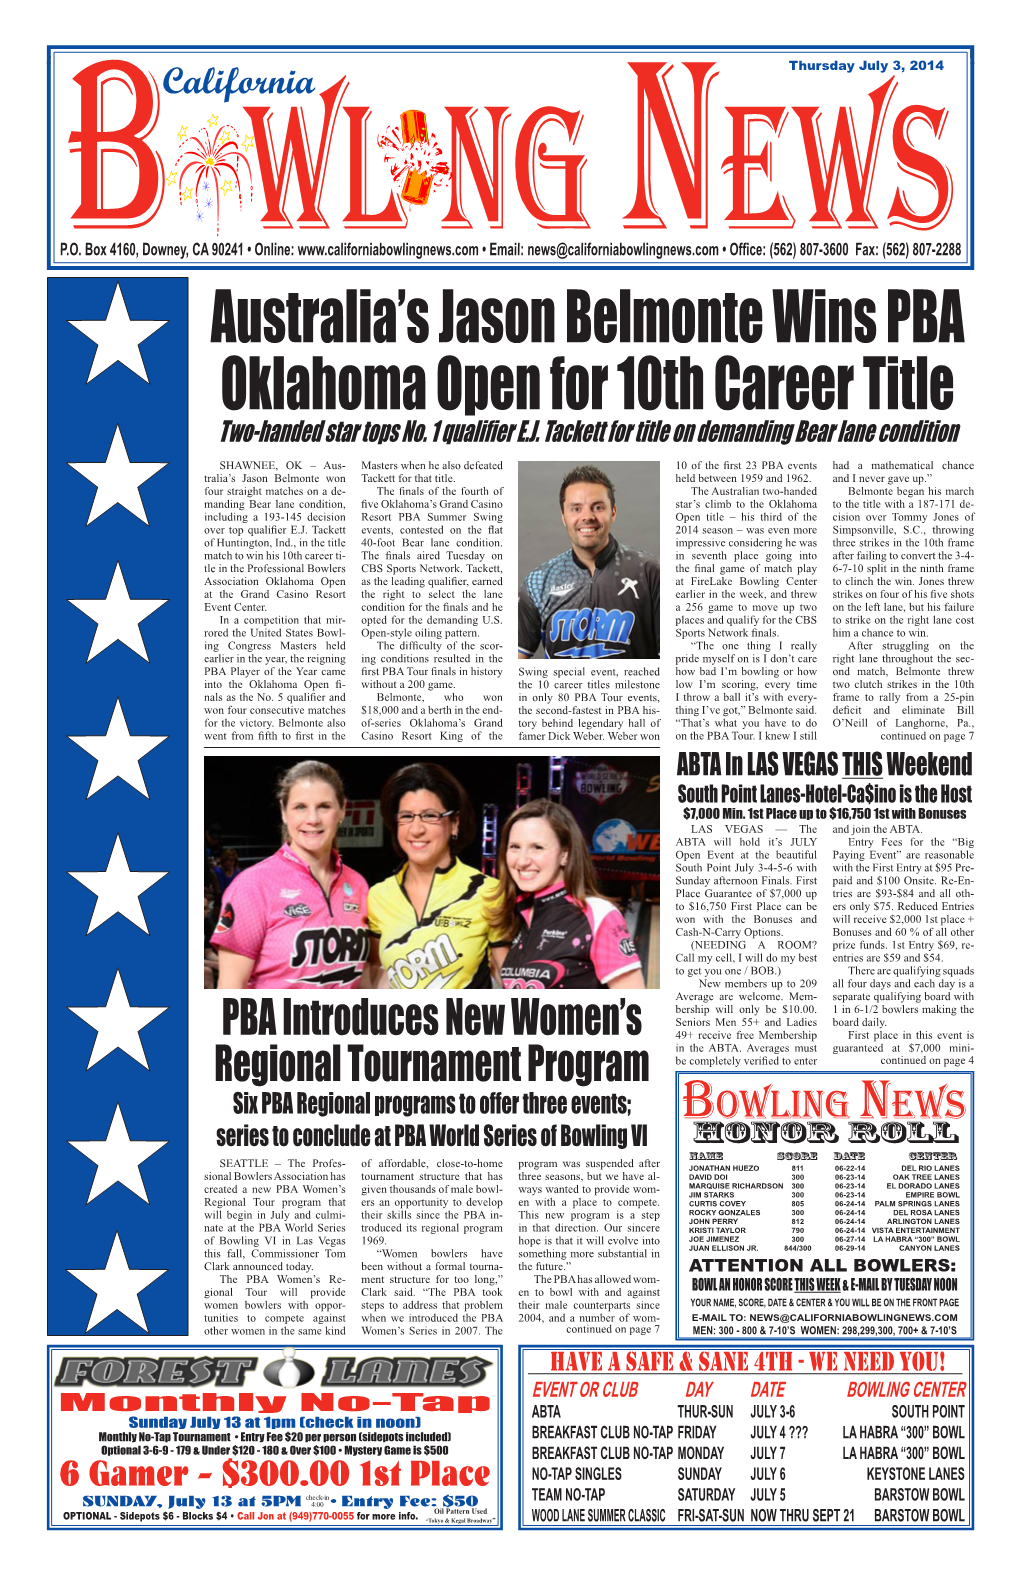 Australia's Jason Belmonte Wins Pba Oklahoma Open for 10Th Career Title